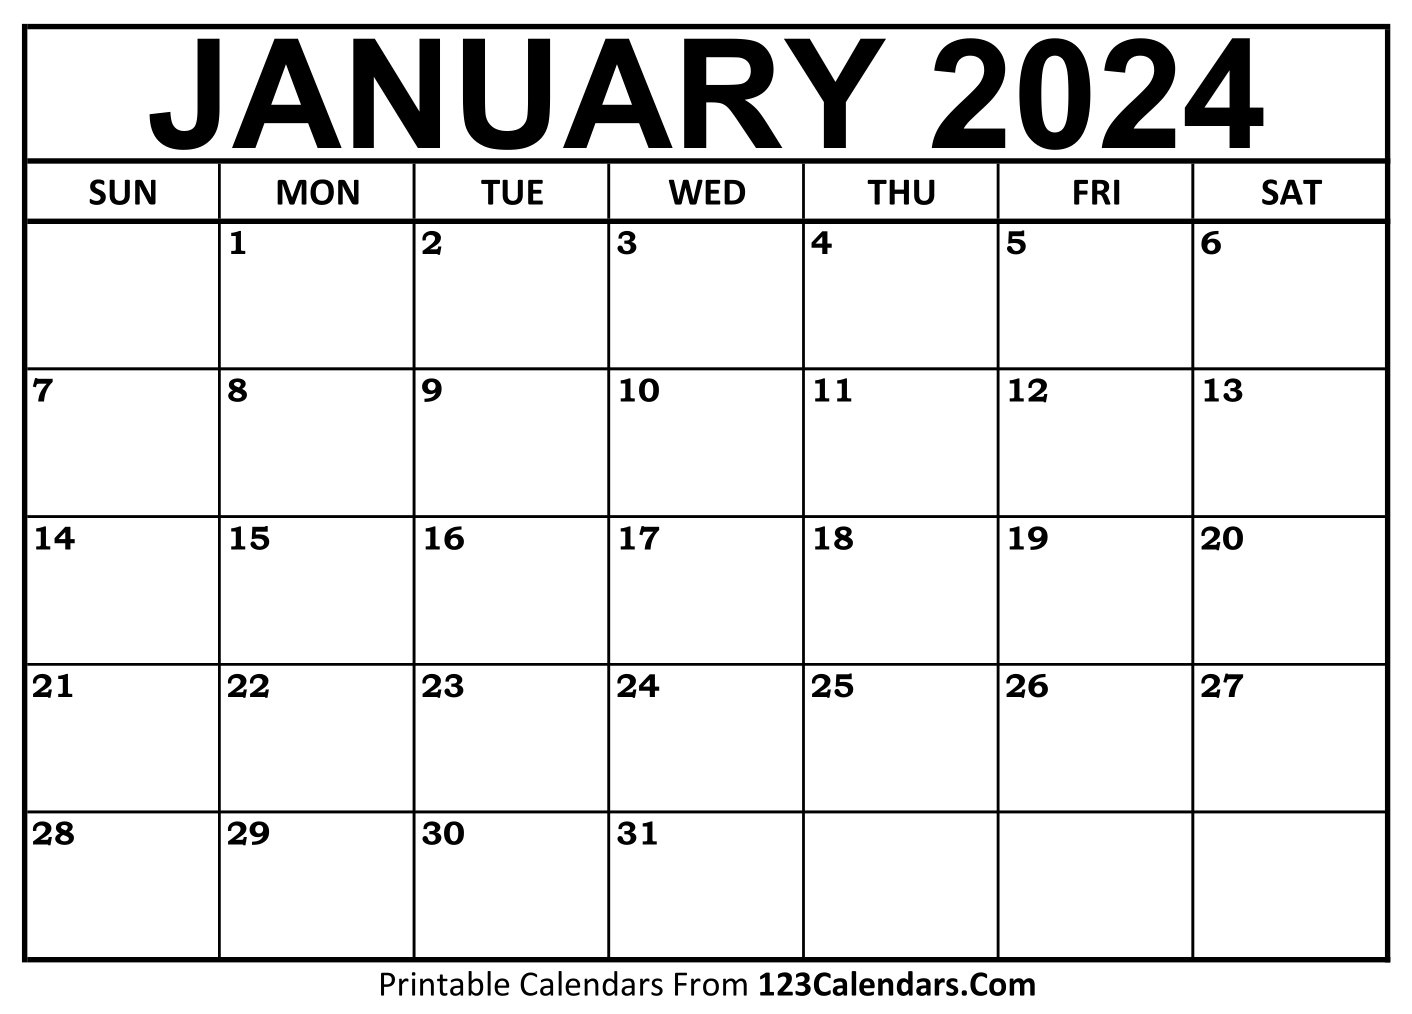 Printable January 2024 Calendar Templates - 123Calendars | Free Printable Calendar 2024 Monthly